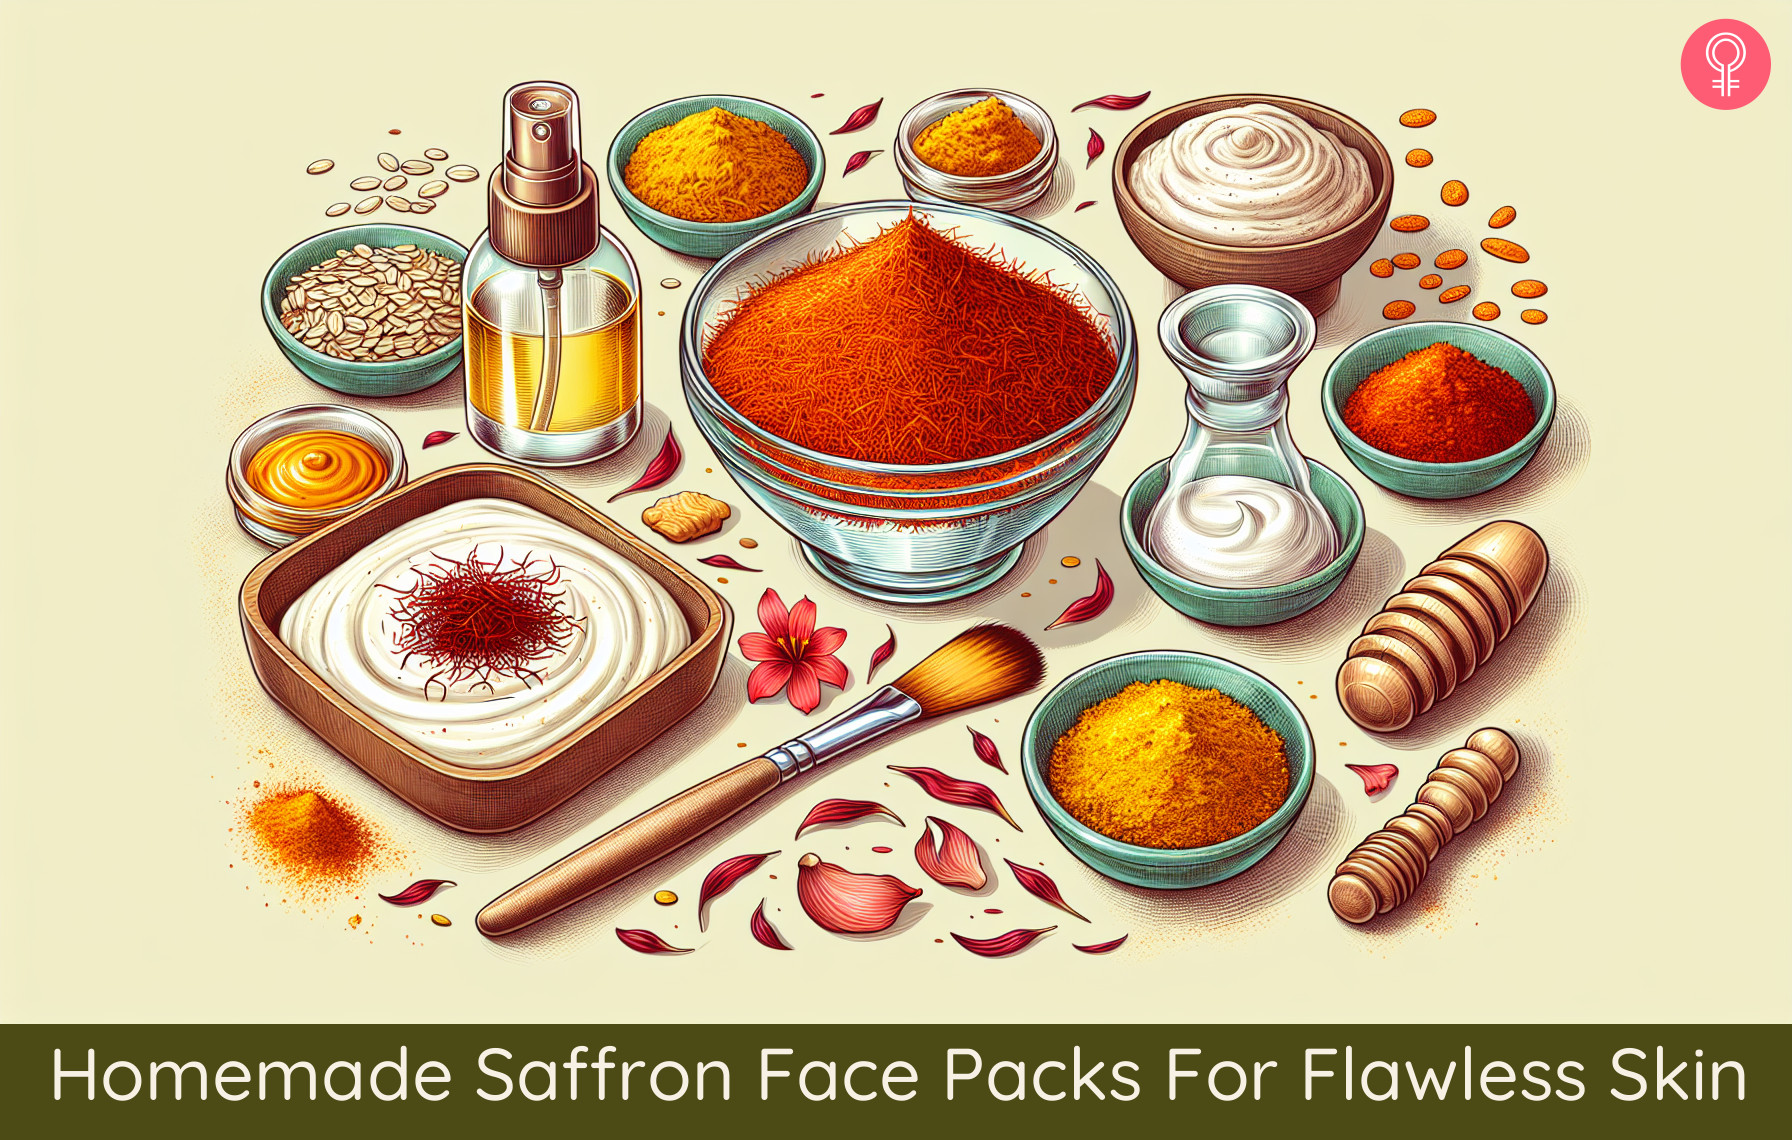 saffron face packs for flawless skin_illustration